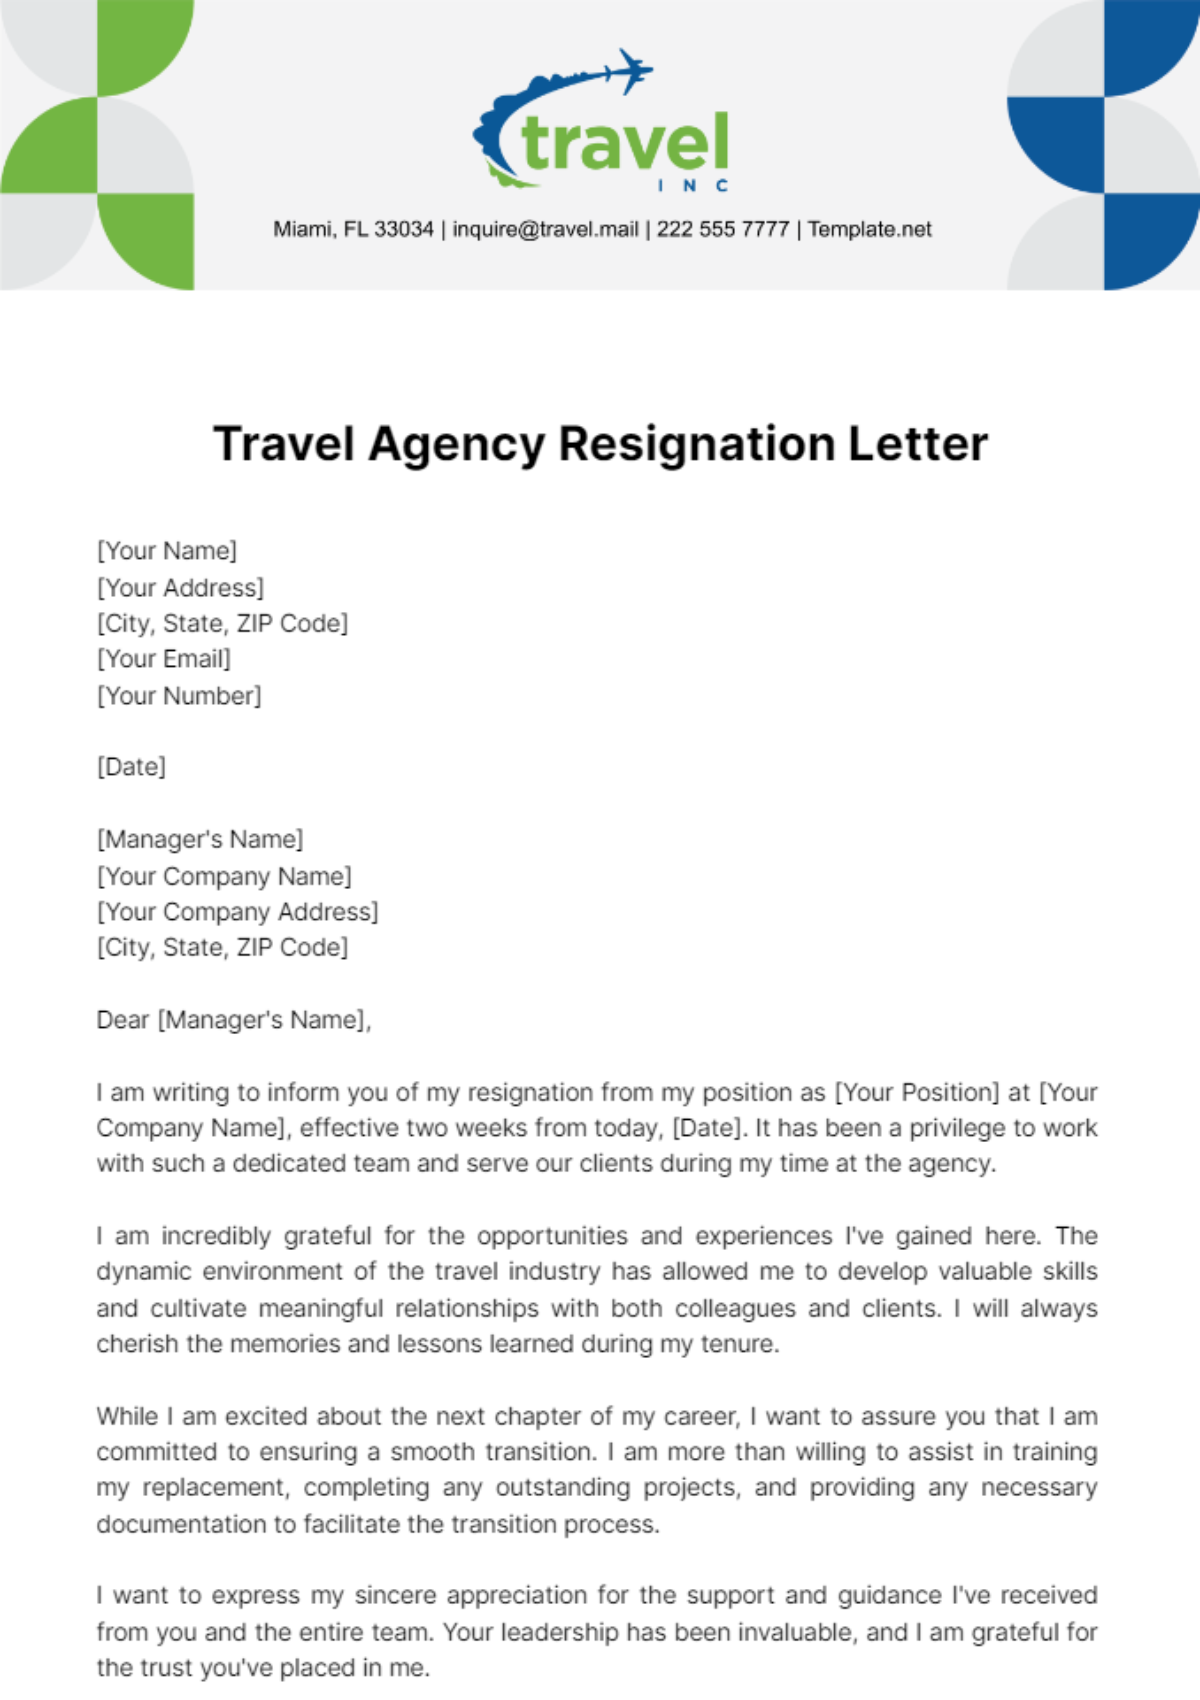 Travel Agency Resignation Letter Template